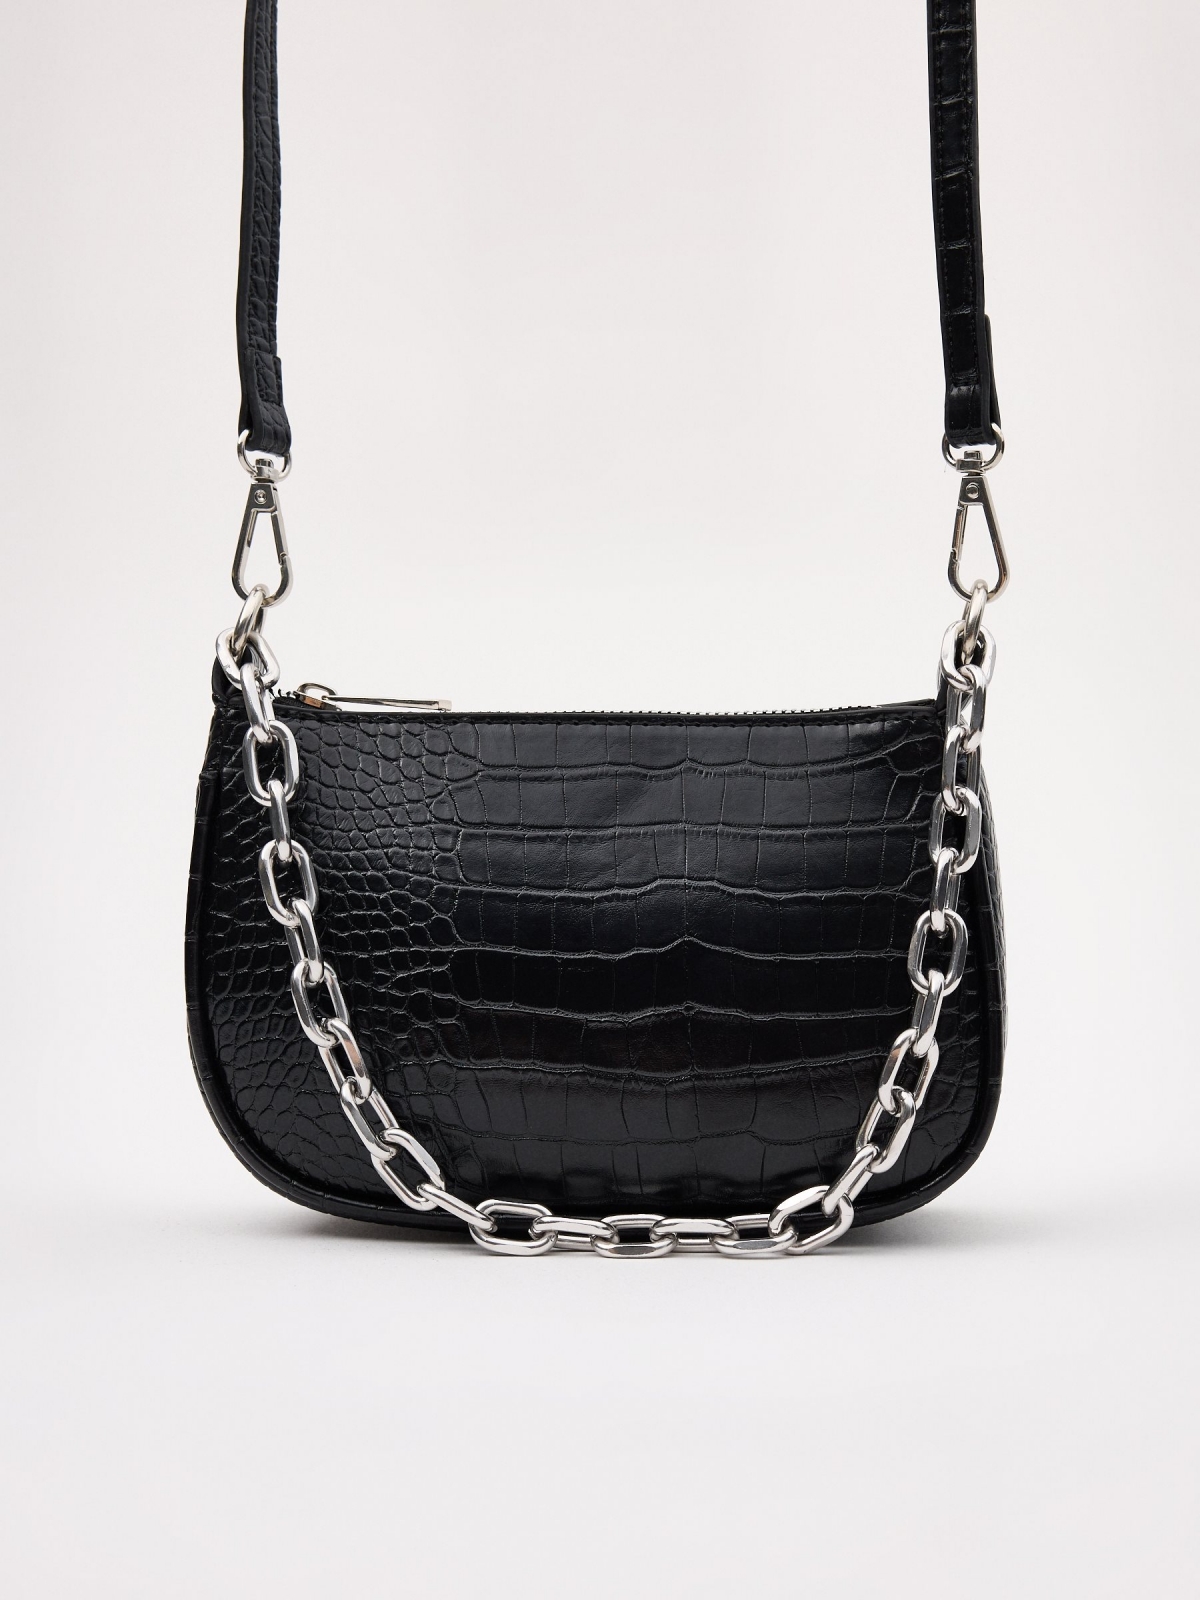 Black leather effect bag black detail view